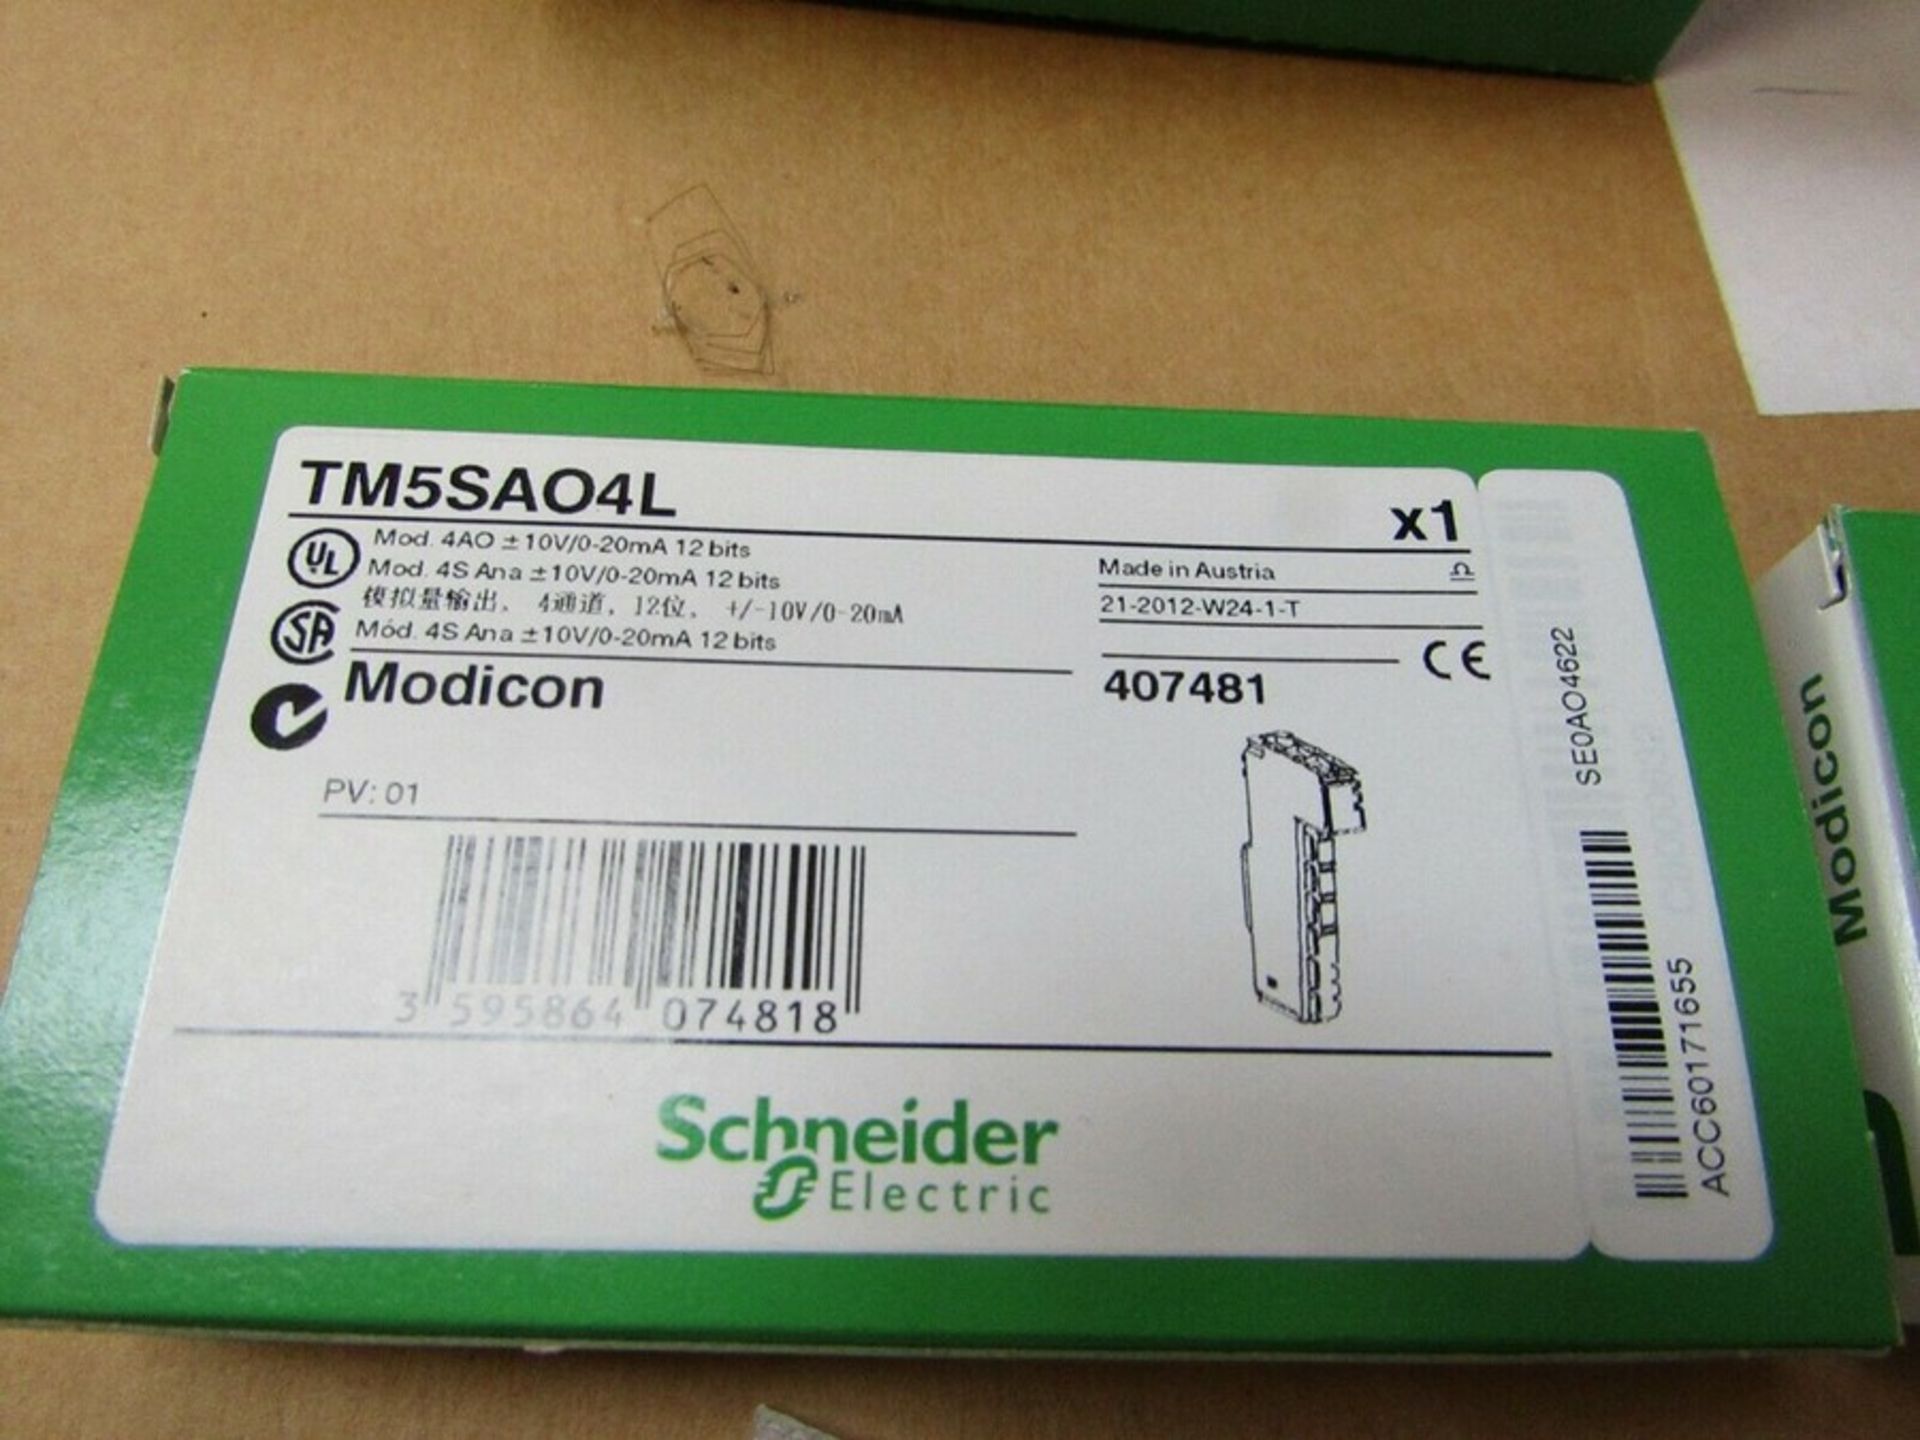 Schneider Electric TM5 M258 PLC I/O Analogue Module Kit - TM5SAO4LK S3 7702491 - Image 3 of 6